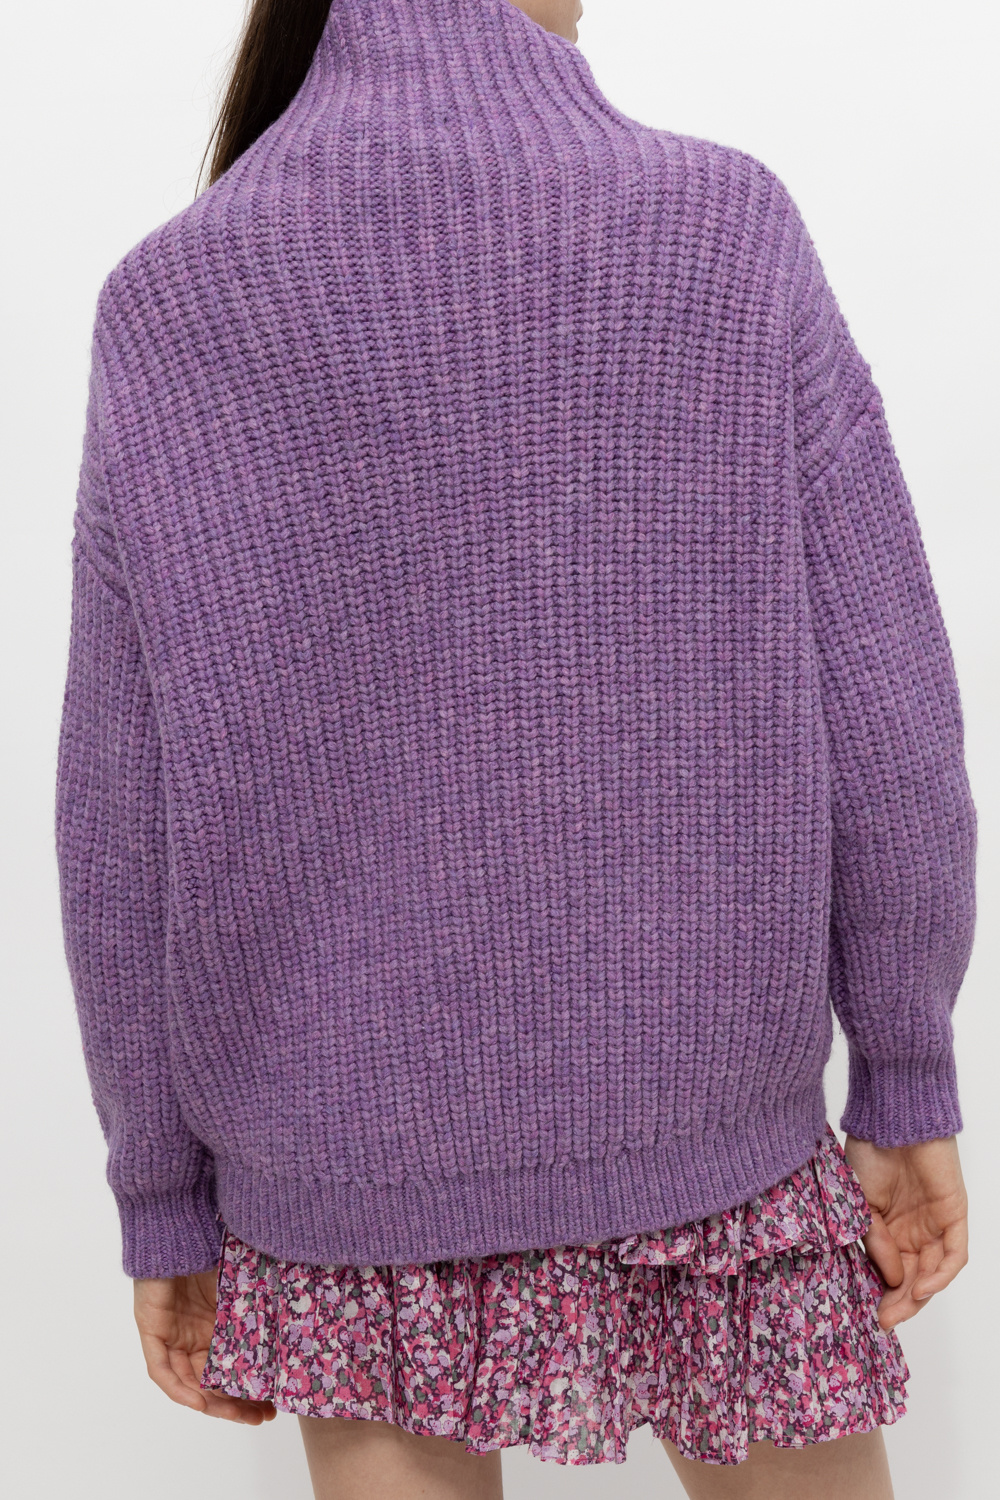 Isabel Marant ‘Iris’ turtleneck this sweater